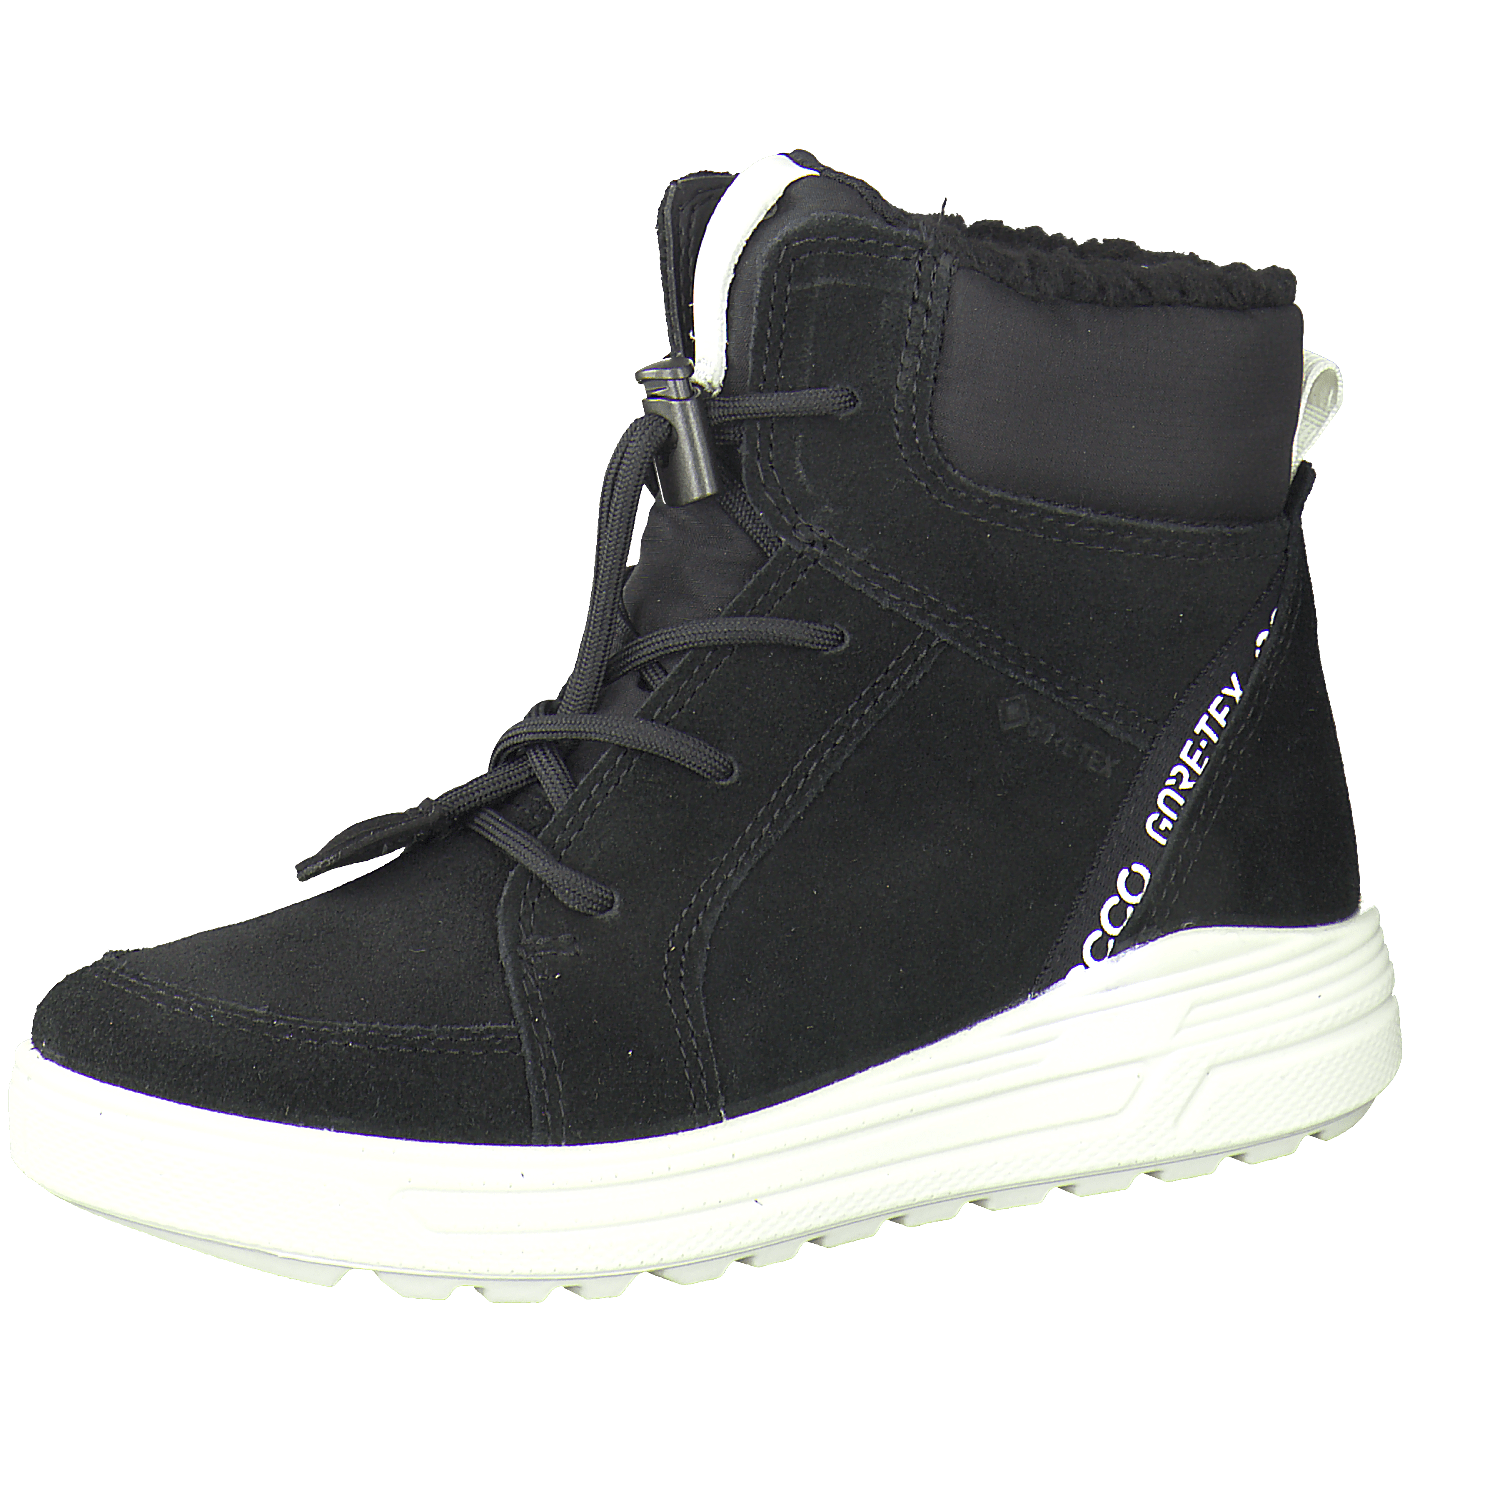 Winterstiefel Urban Snowboarder SL GTX – asmus shoes & beautiful things